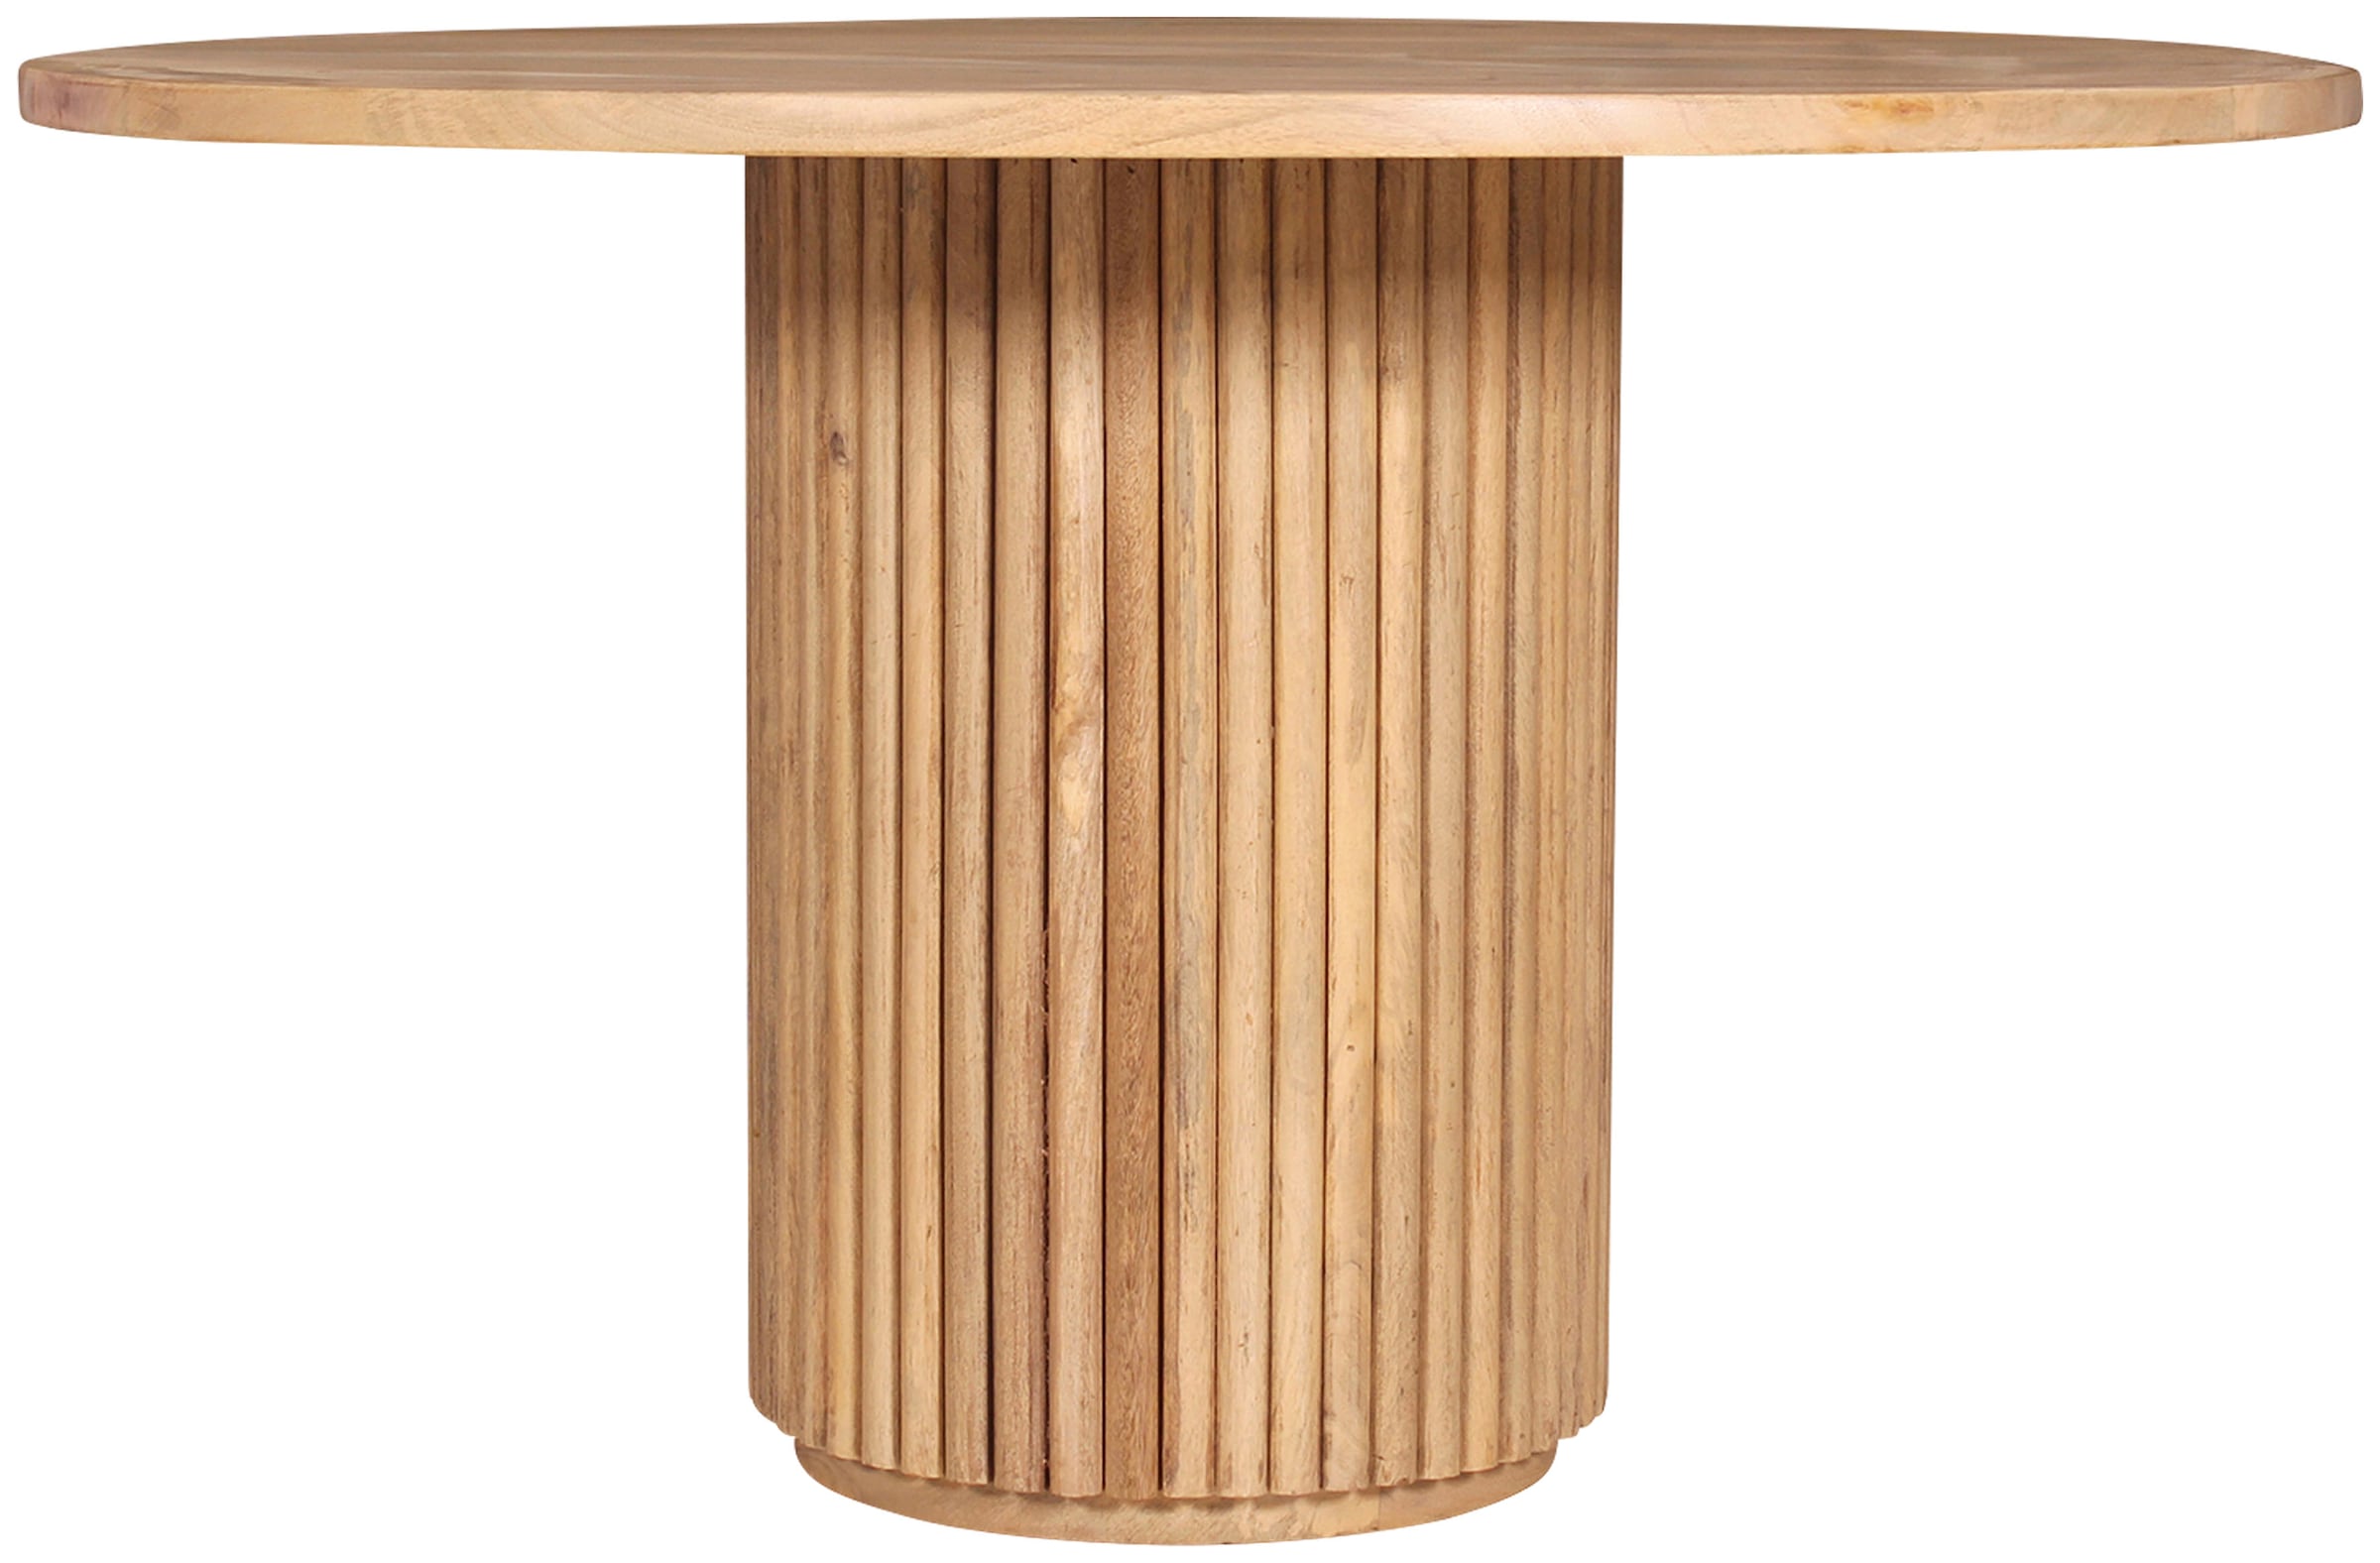 TOM TAILOR HOME Esstisch »Ribbed Side Table High«, mit Säulenfuß im extravaganten Ribbed-Look